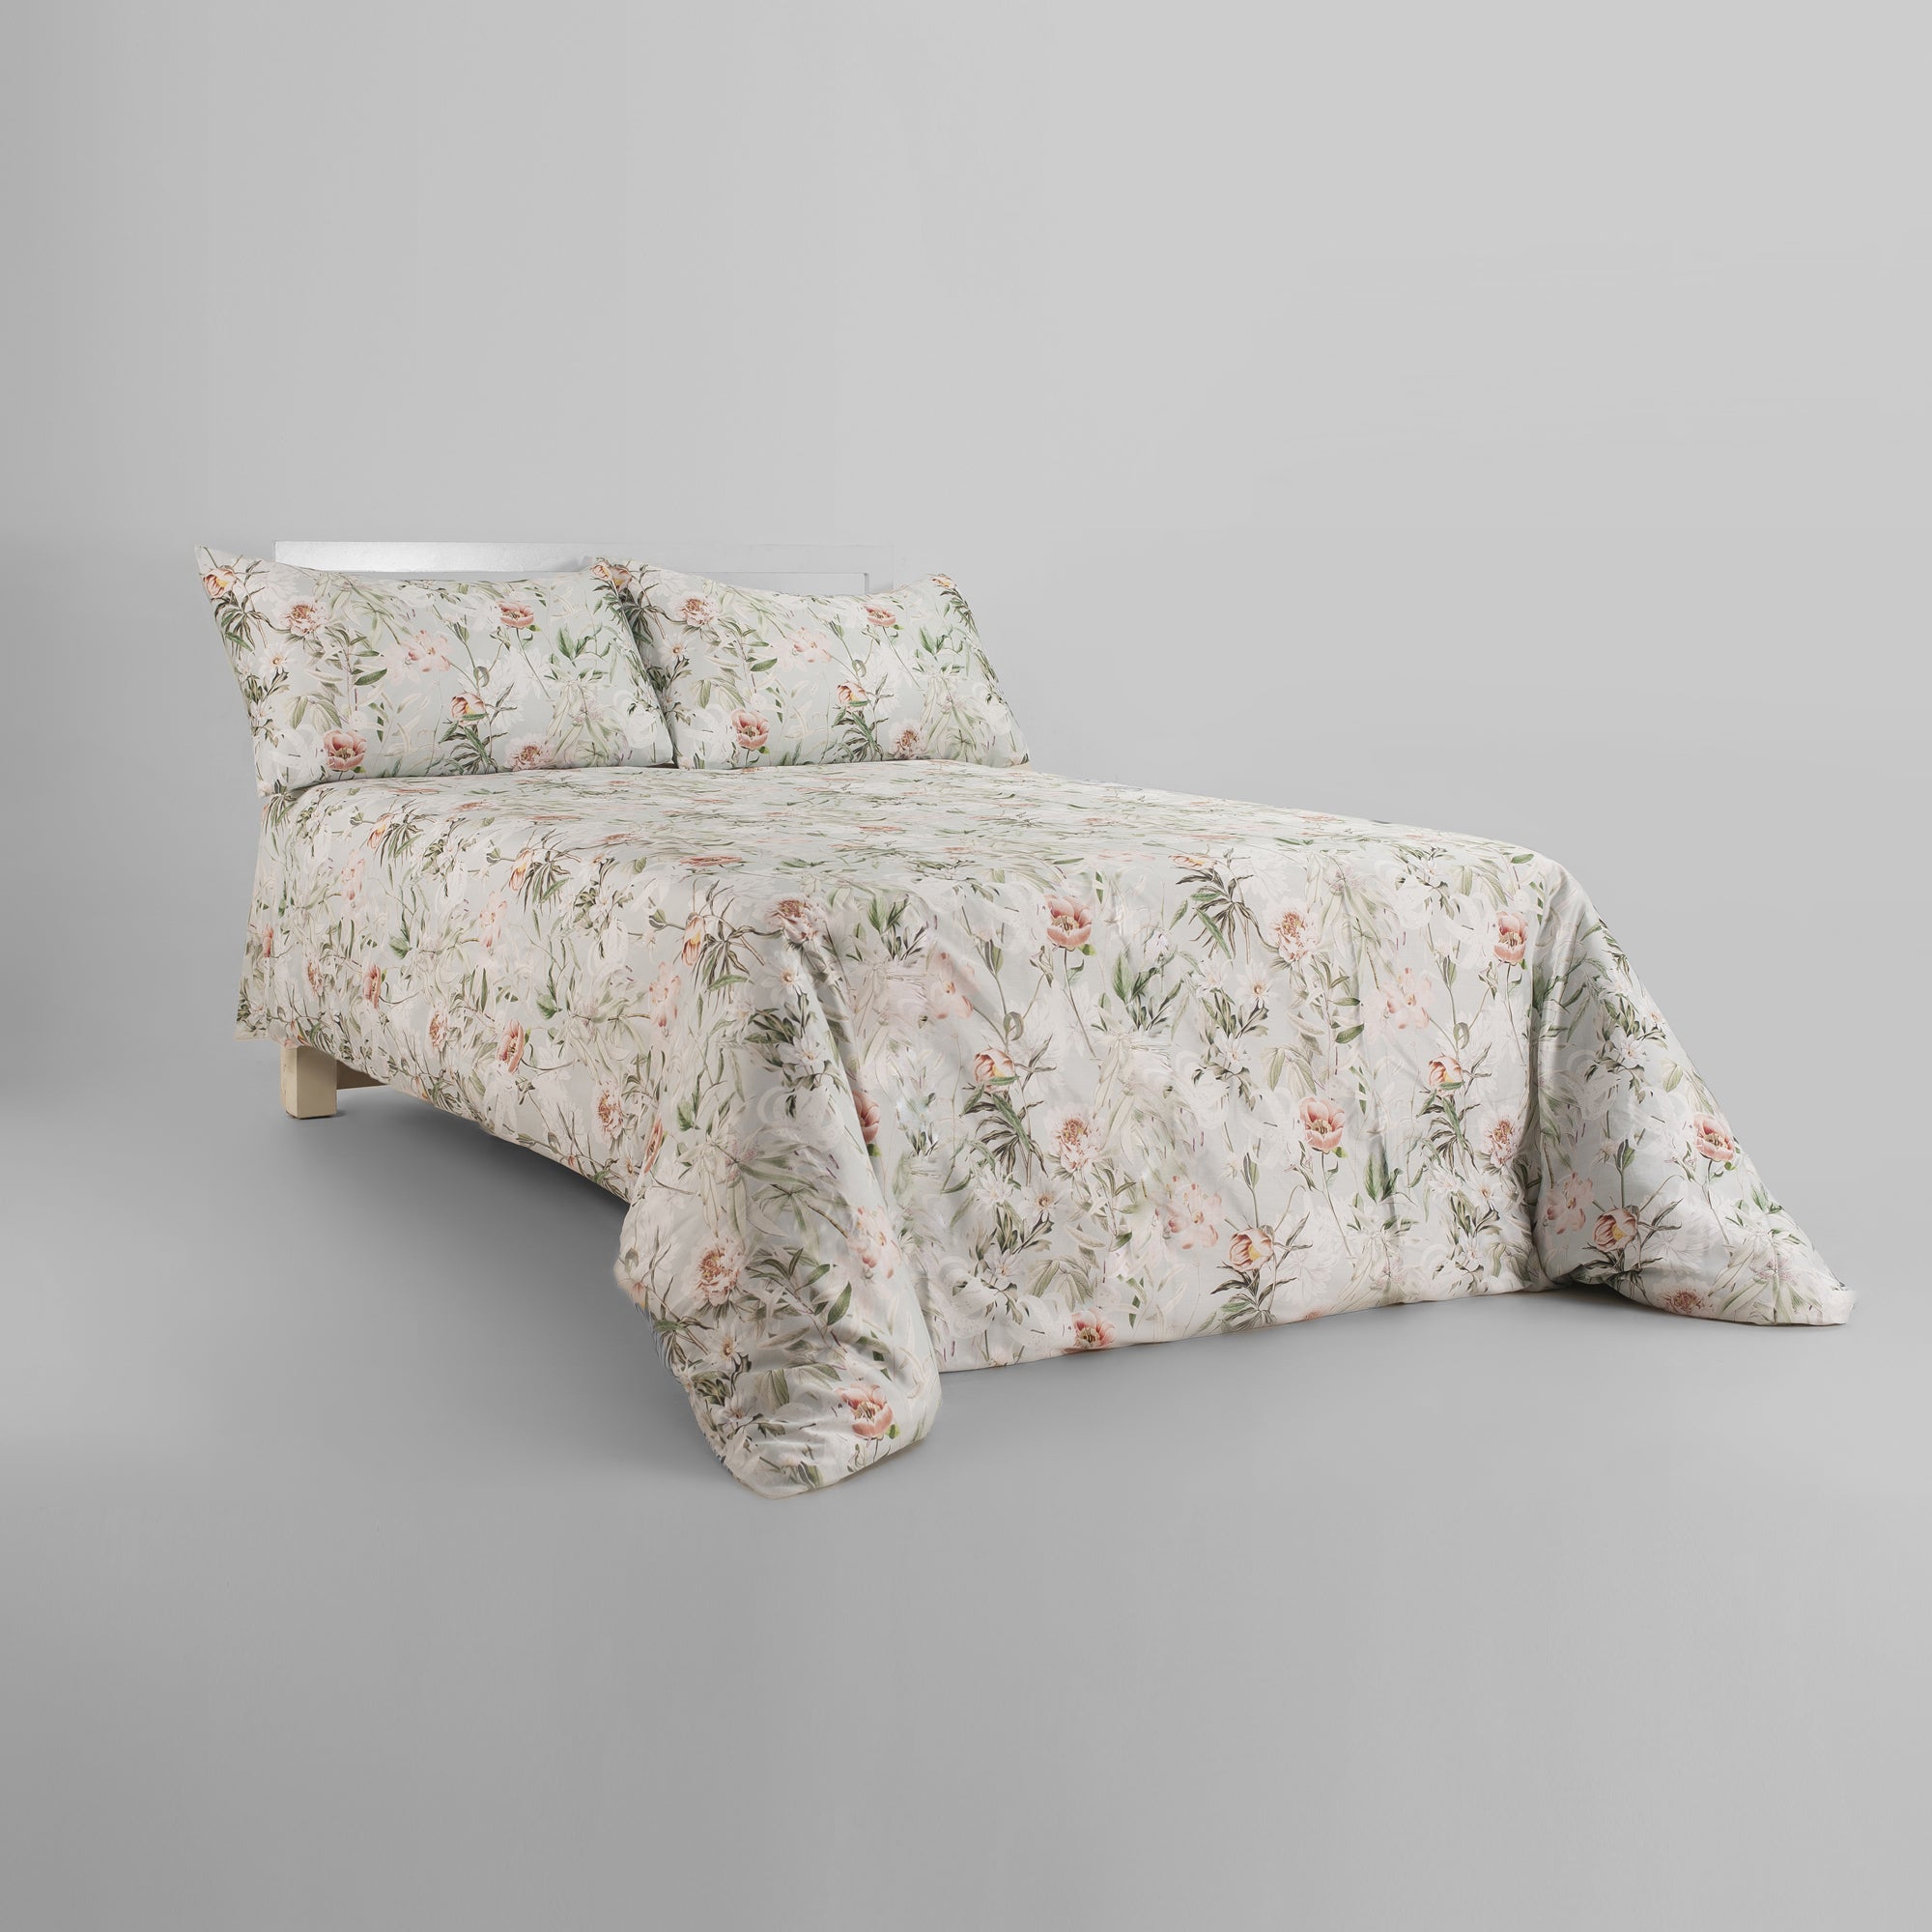 The Linen Company Bedding Summer Mirage Bed Sheet Set